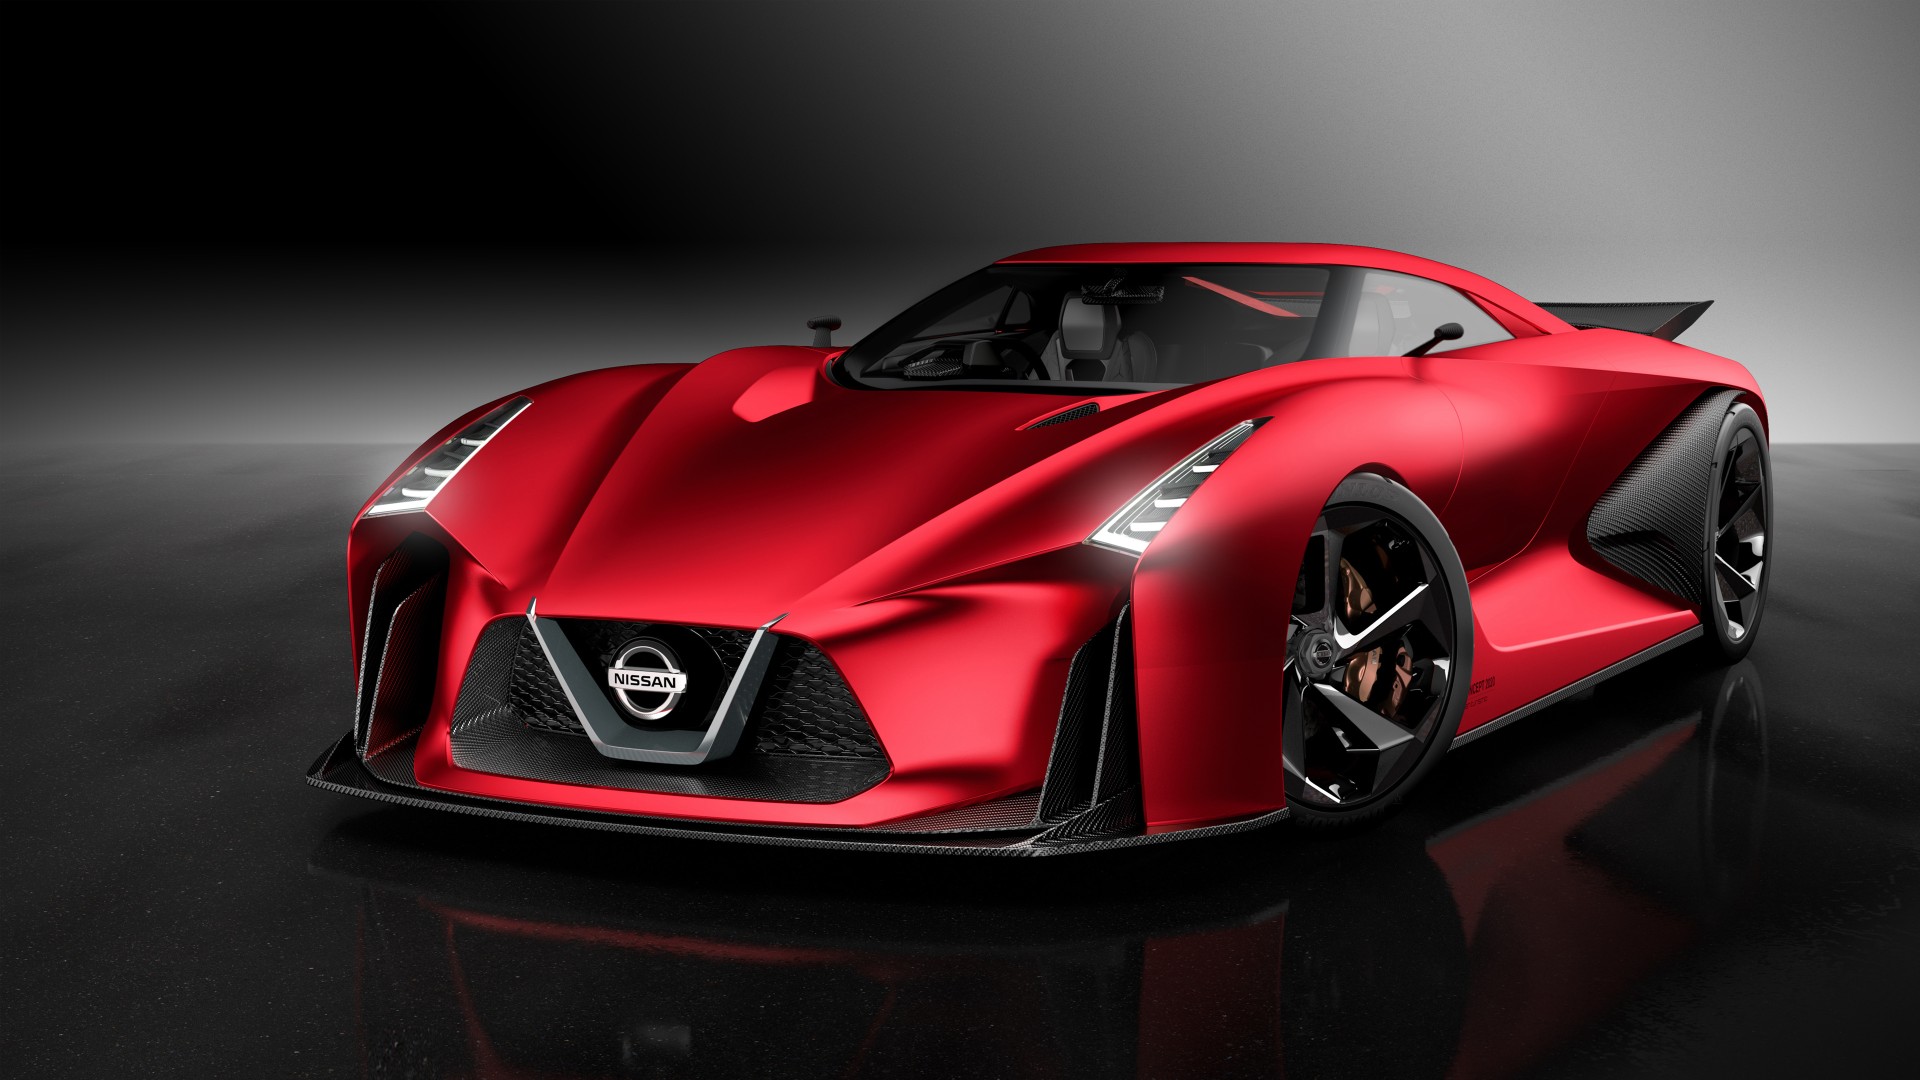 Nissan Concept 2020 Vision Gran Turismo Wallpaper | HD Car ...